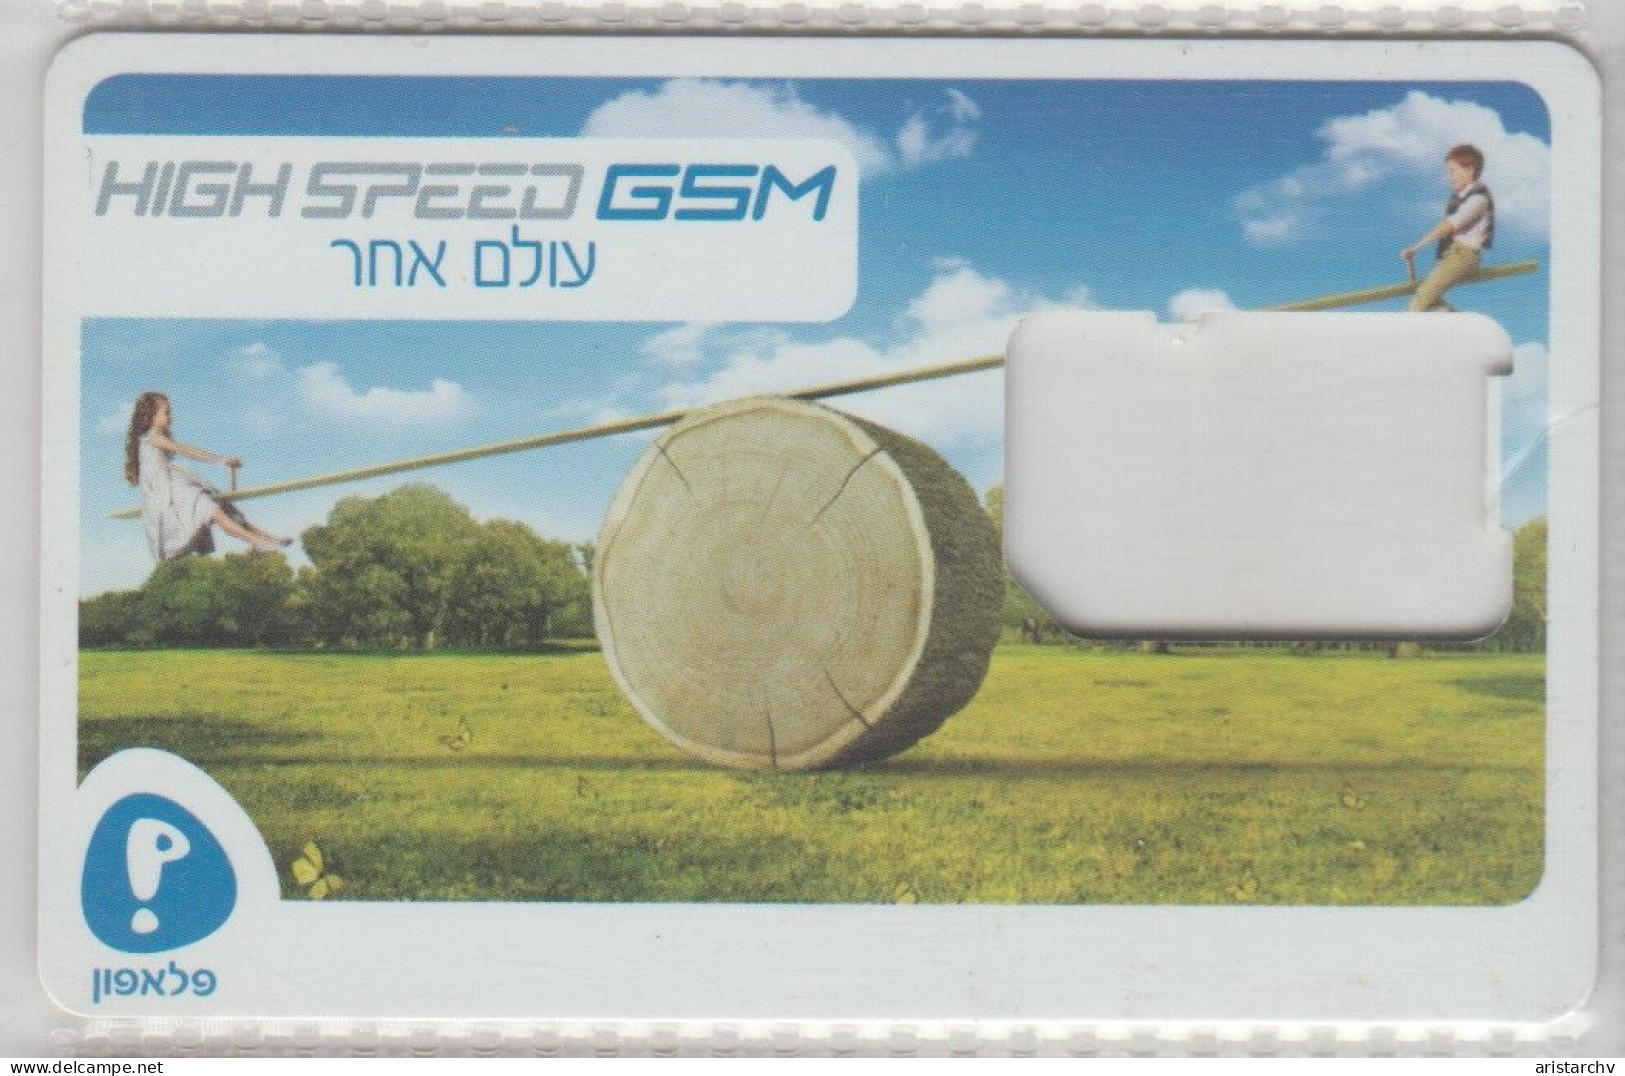 ISRAEL PELEPHONE HIGH SPEED GSM USED PHONE CARD - Israele